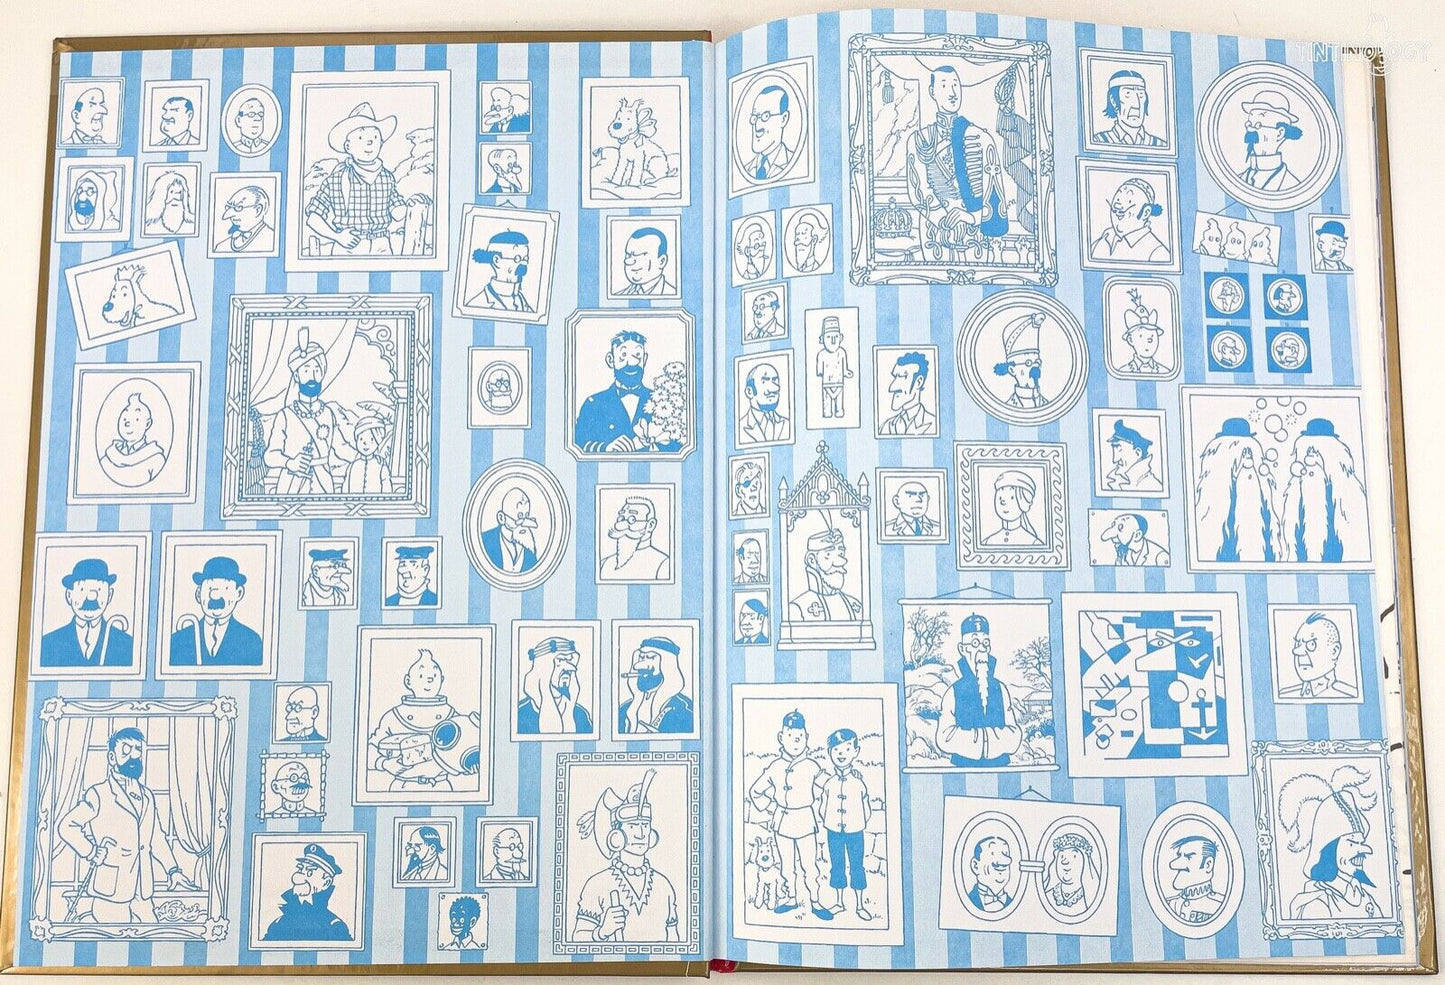 Tintin & Alph-Art - 1st UK Edition 2004 Egmont Hardback Comic Book by Herge